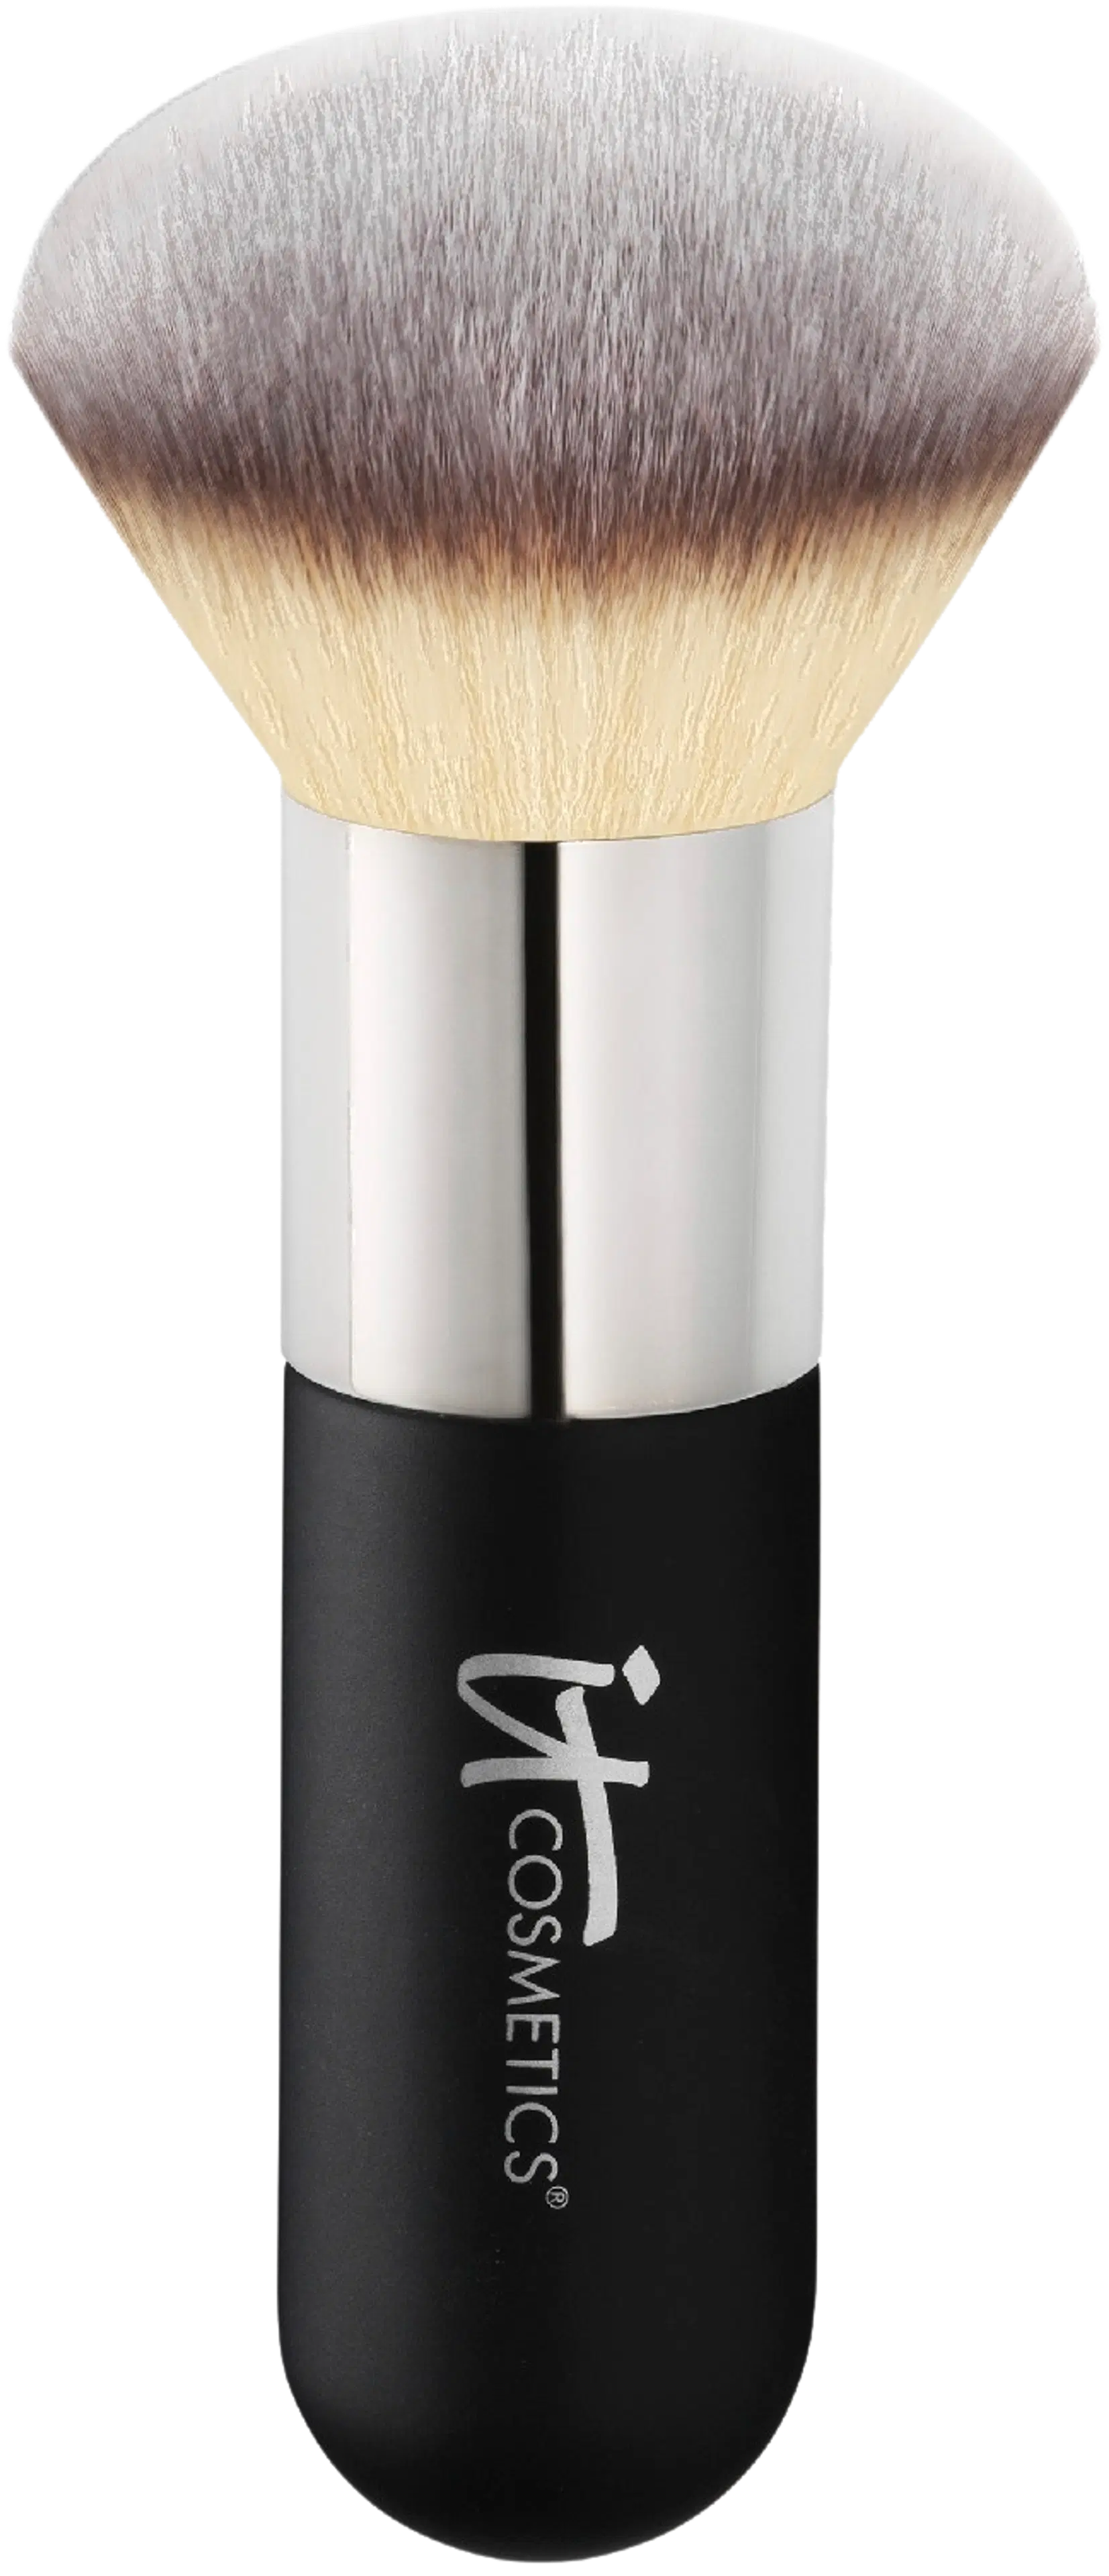 It Cosmetics Heavenly Luxe™ Airbrush Powder & Bronzer Brush #1 aurinkopuuterisivellin